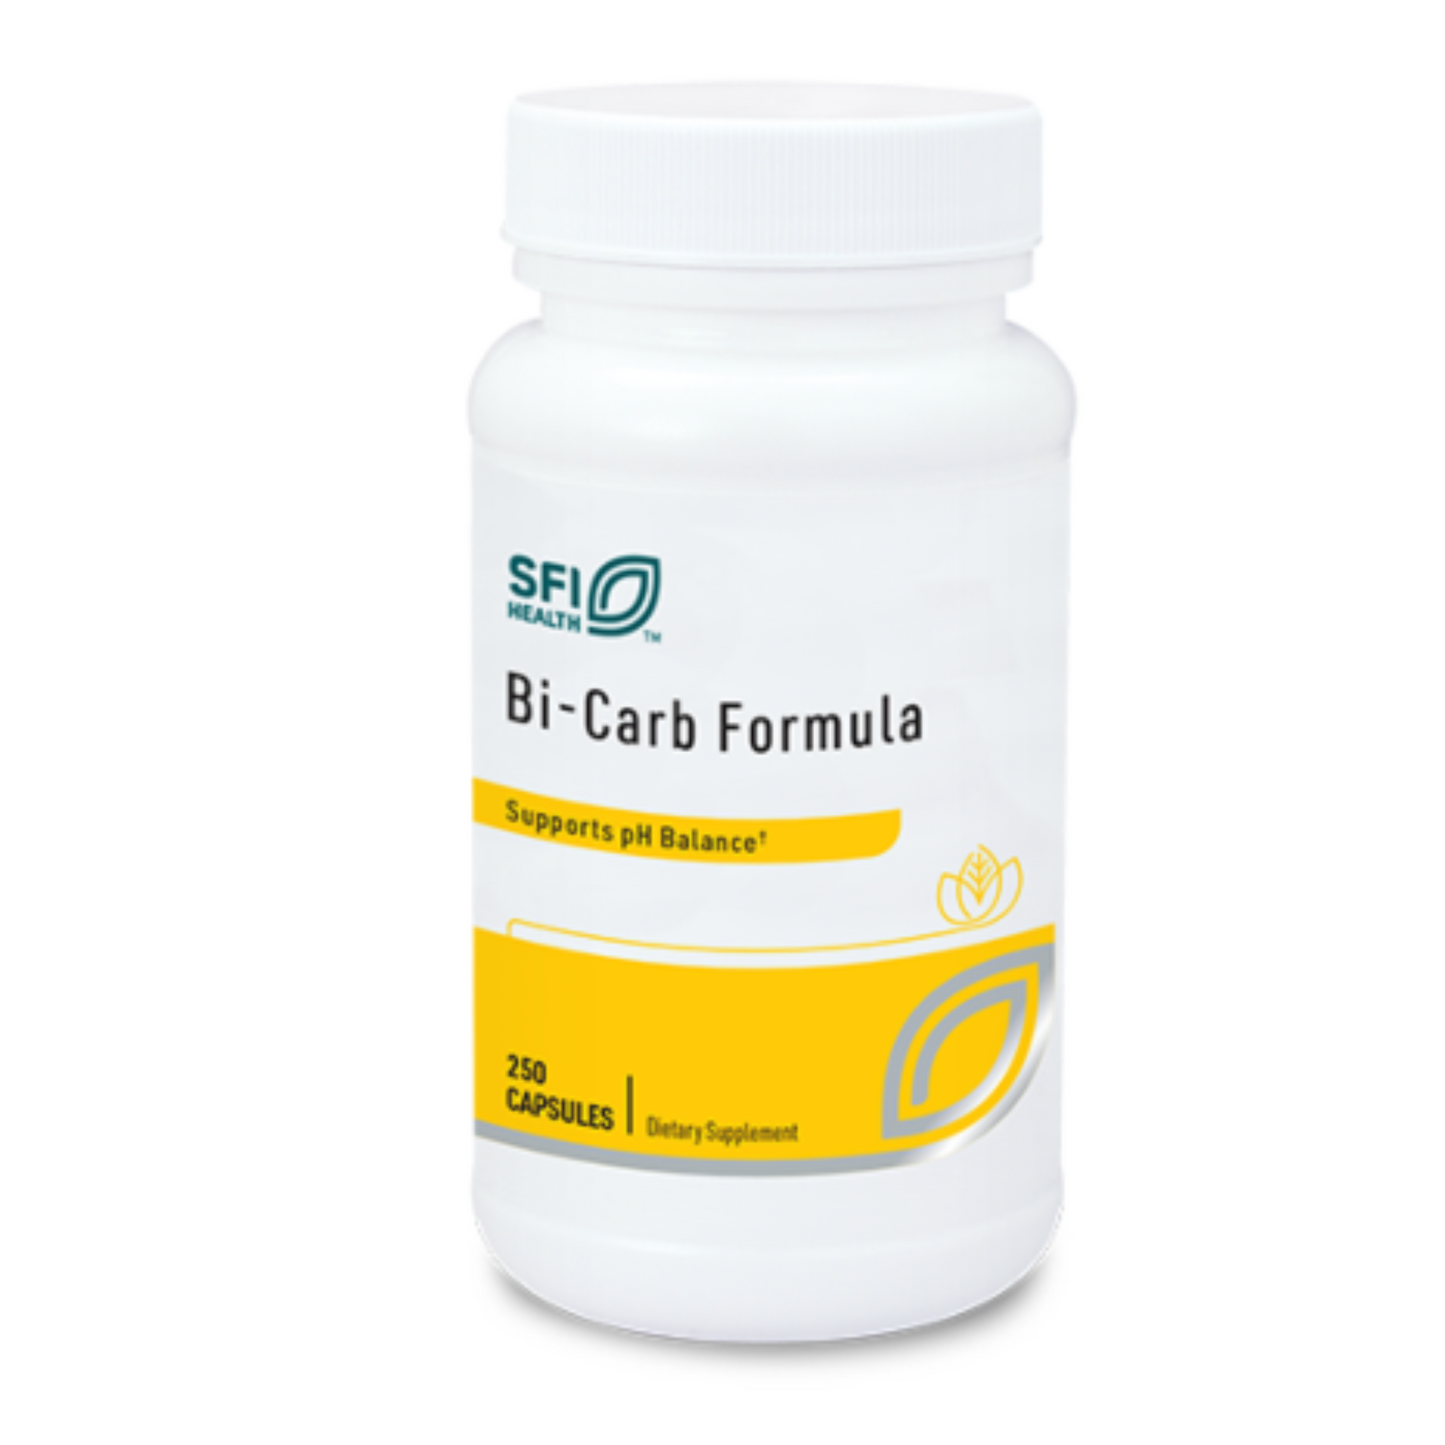 Bi-Carb Formula